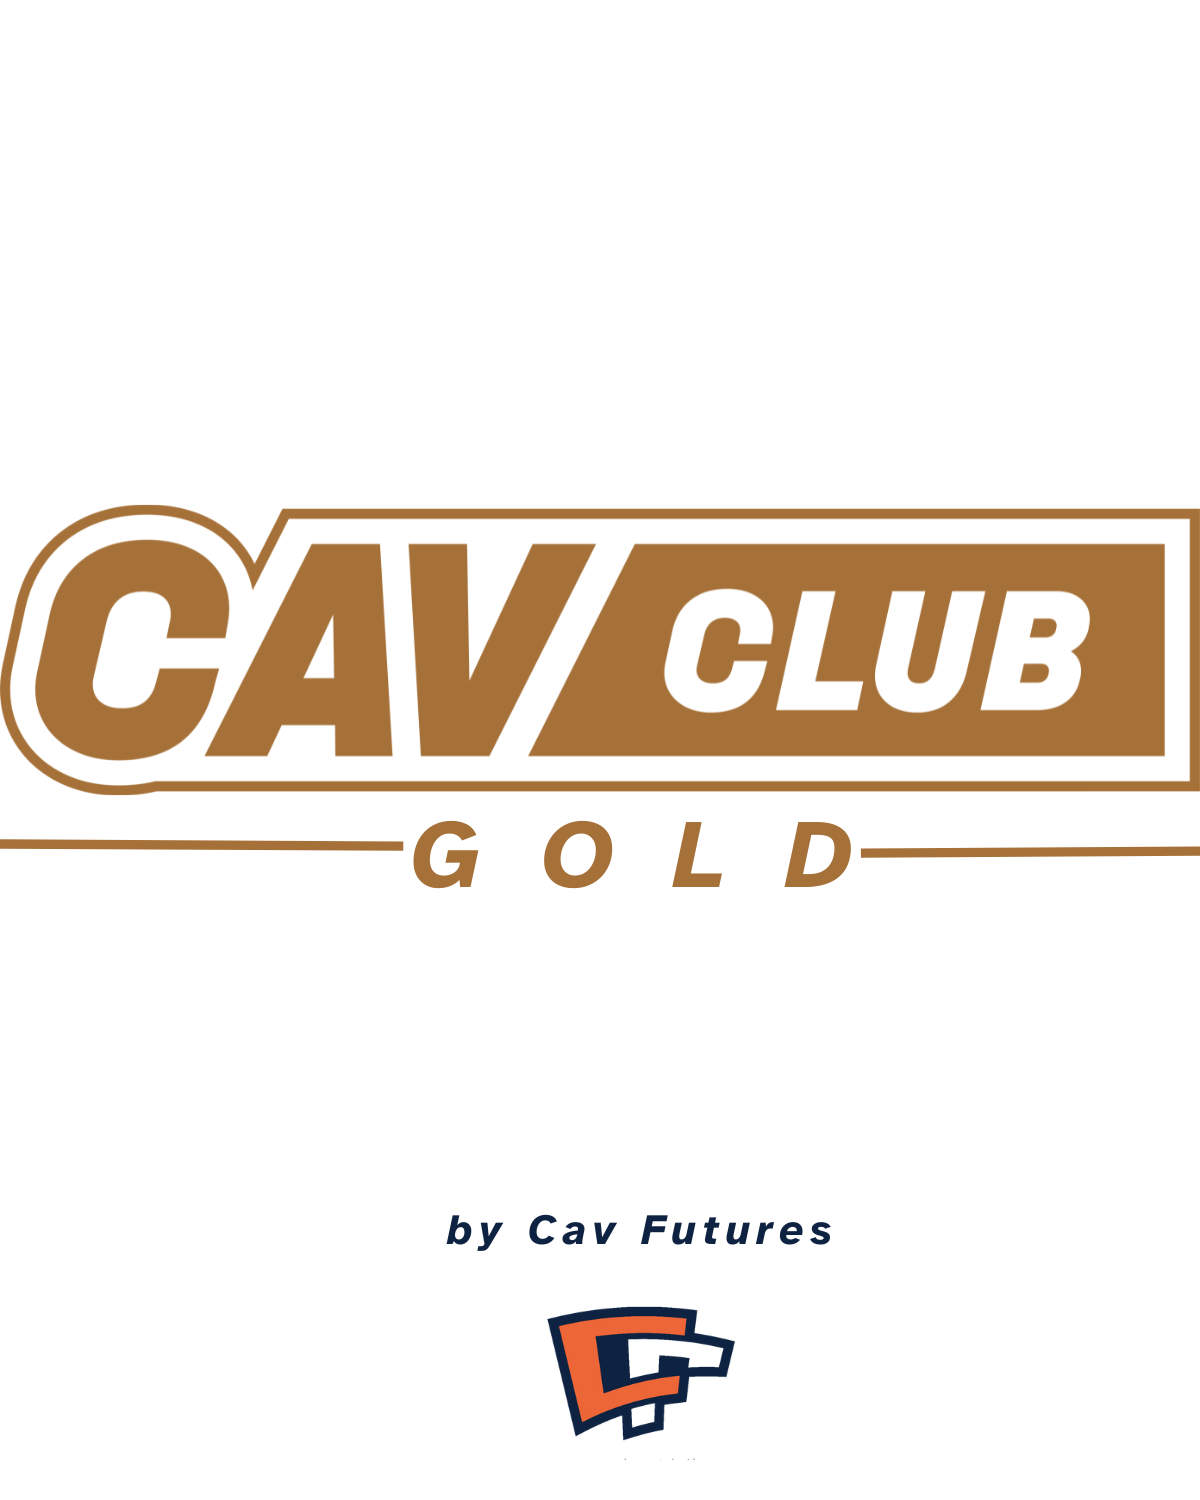 Cav Club Gold